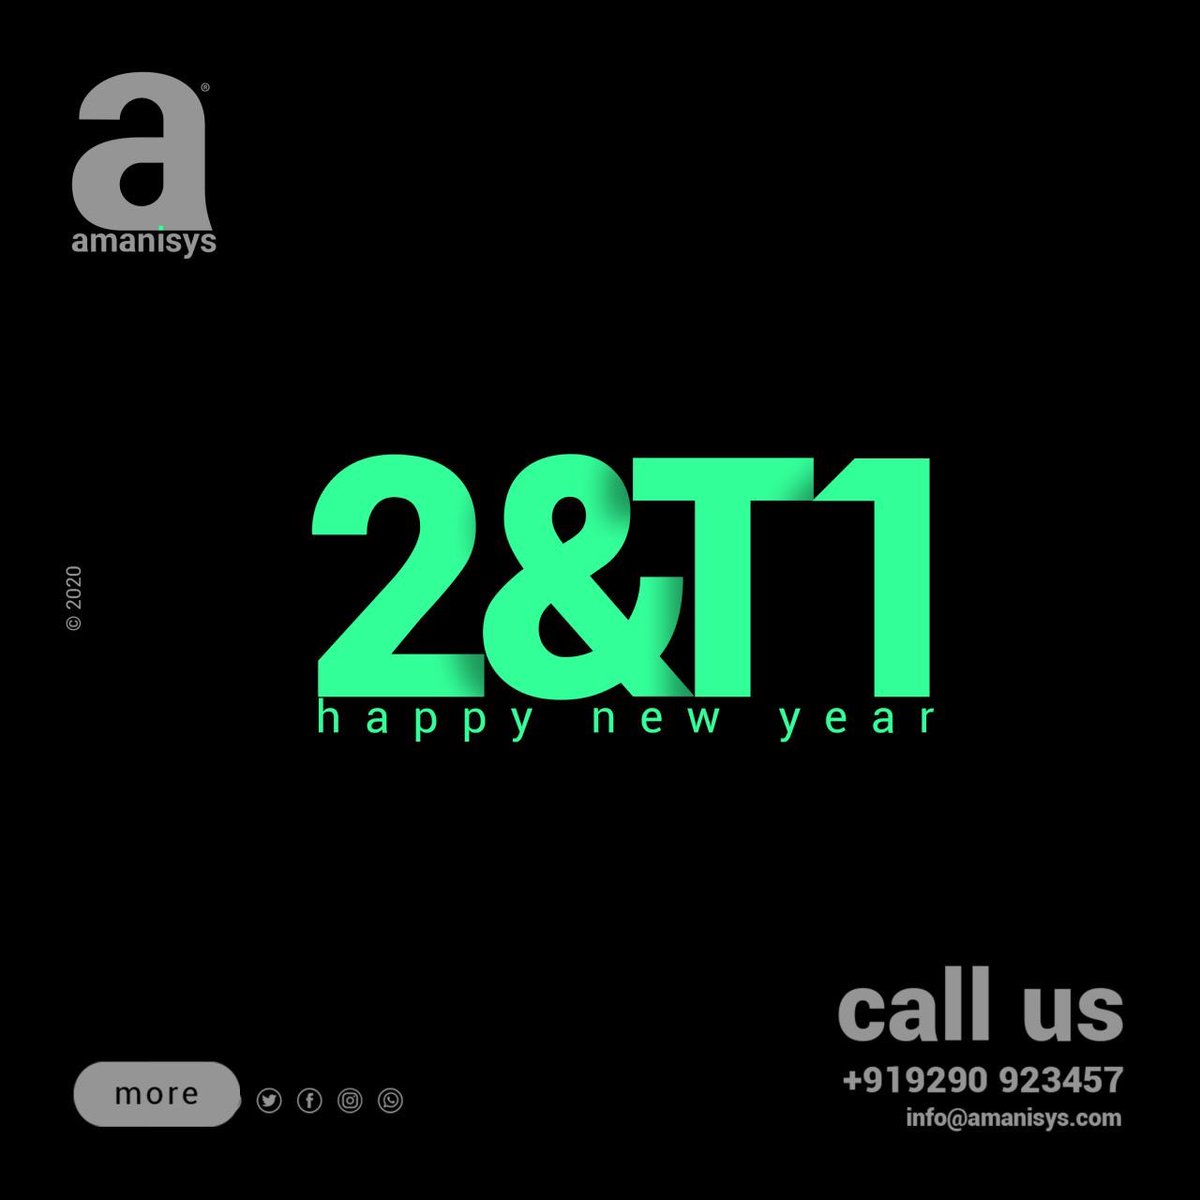 Wishing you a very Happy New Year - 2021 amanisys.com#design Social Media Marketing, Graphic Design, Illustration, Packaging Design, Logo Design, Video Production, Presentation Design, Brand Design, Print Design, and #logo #packagingdesign #branding #graphicdesign